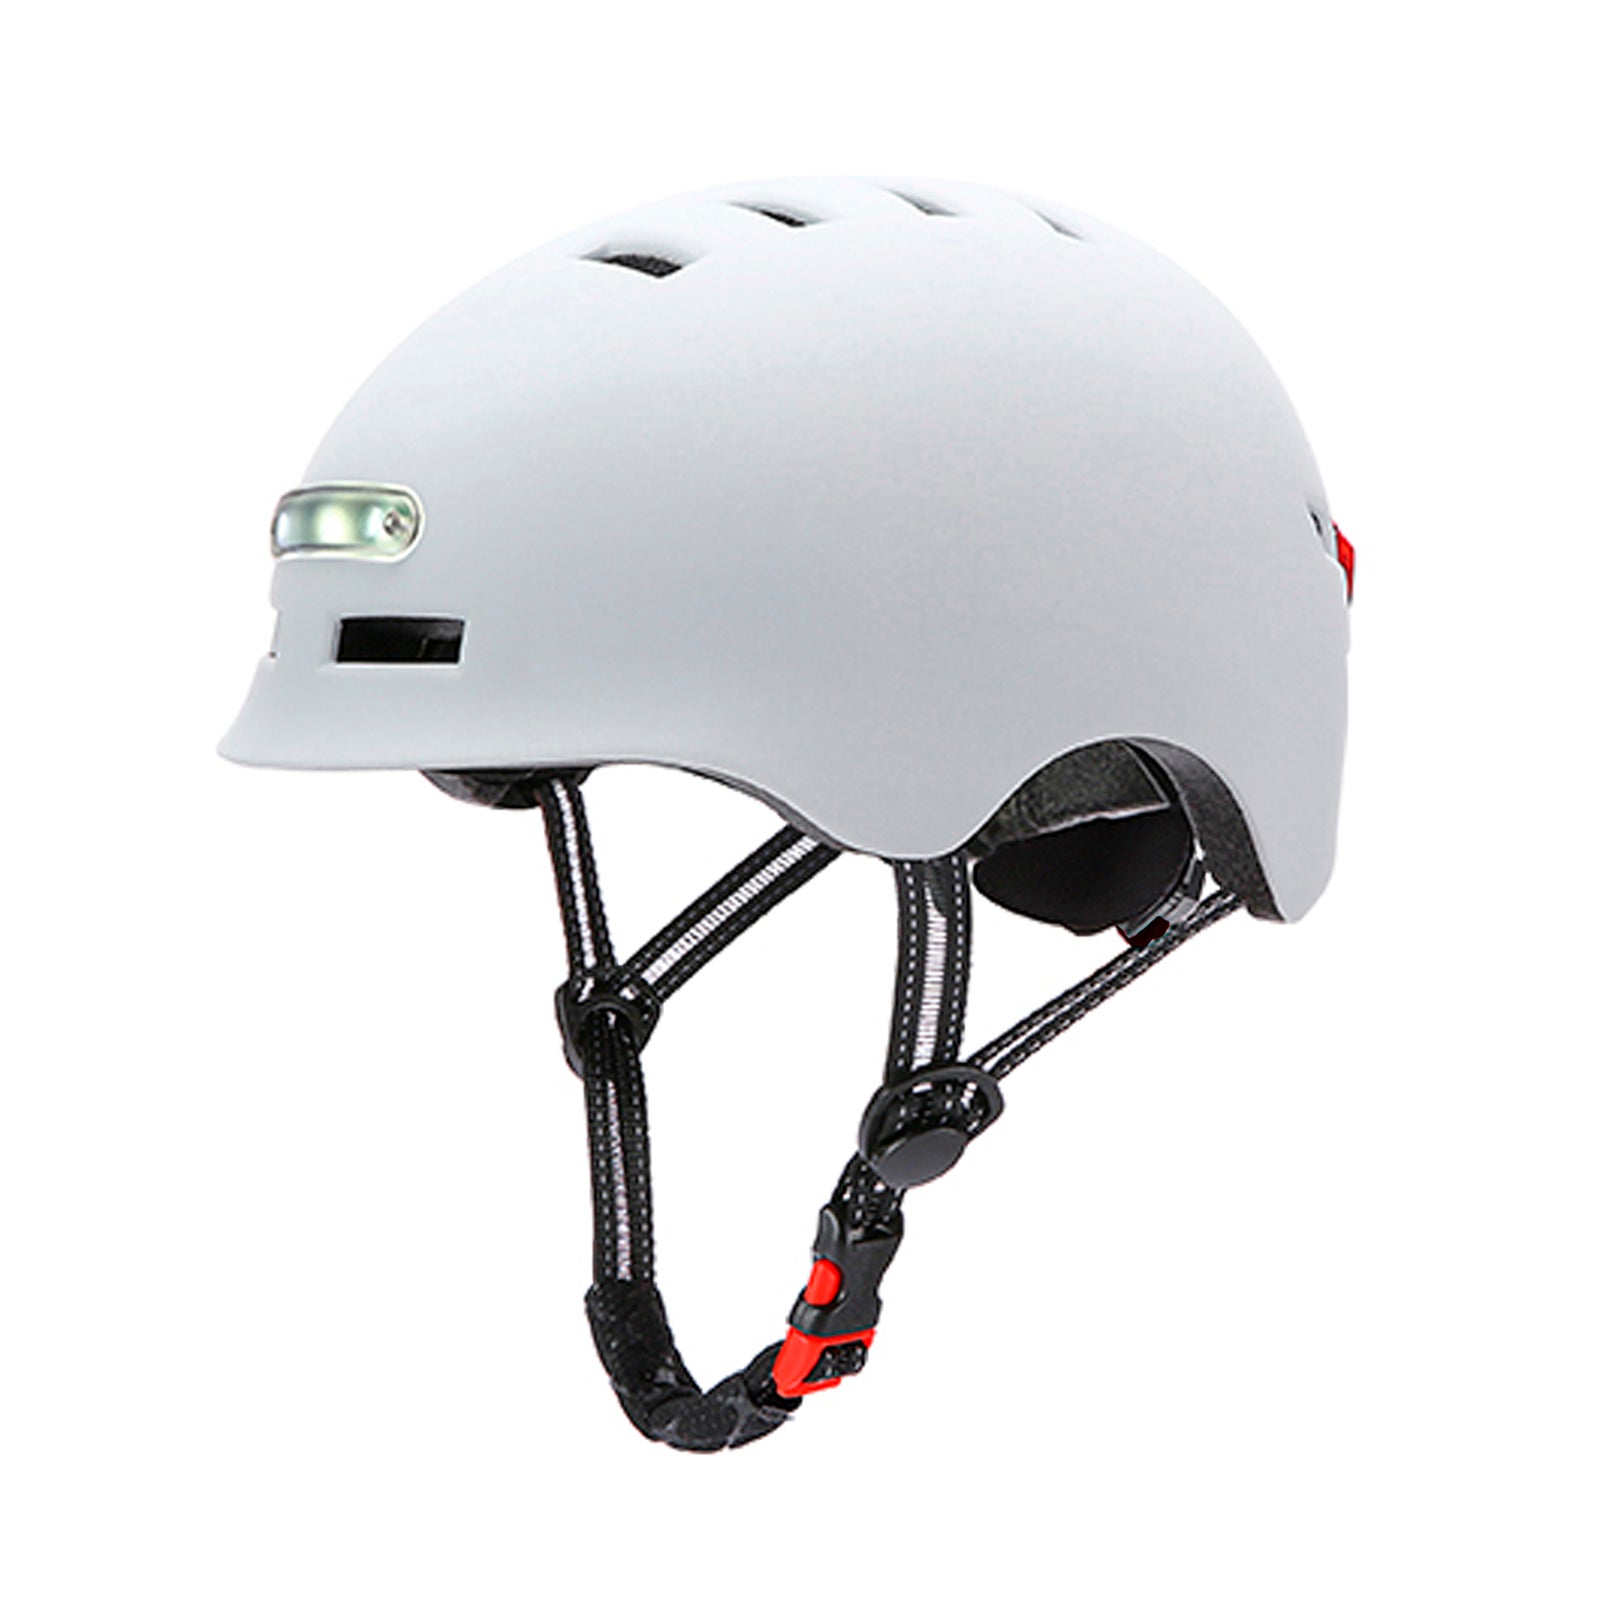 ACA L Size White Smart Bike Cycling Bicycle Helmet Headlight Tail Warning Light Outdoor Sport